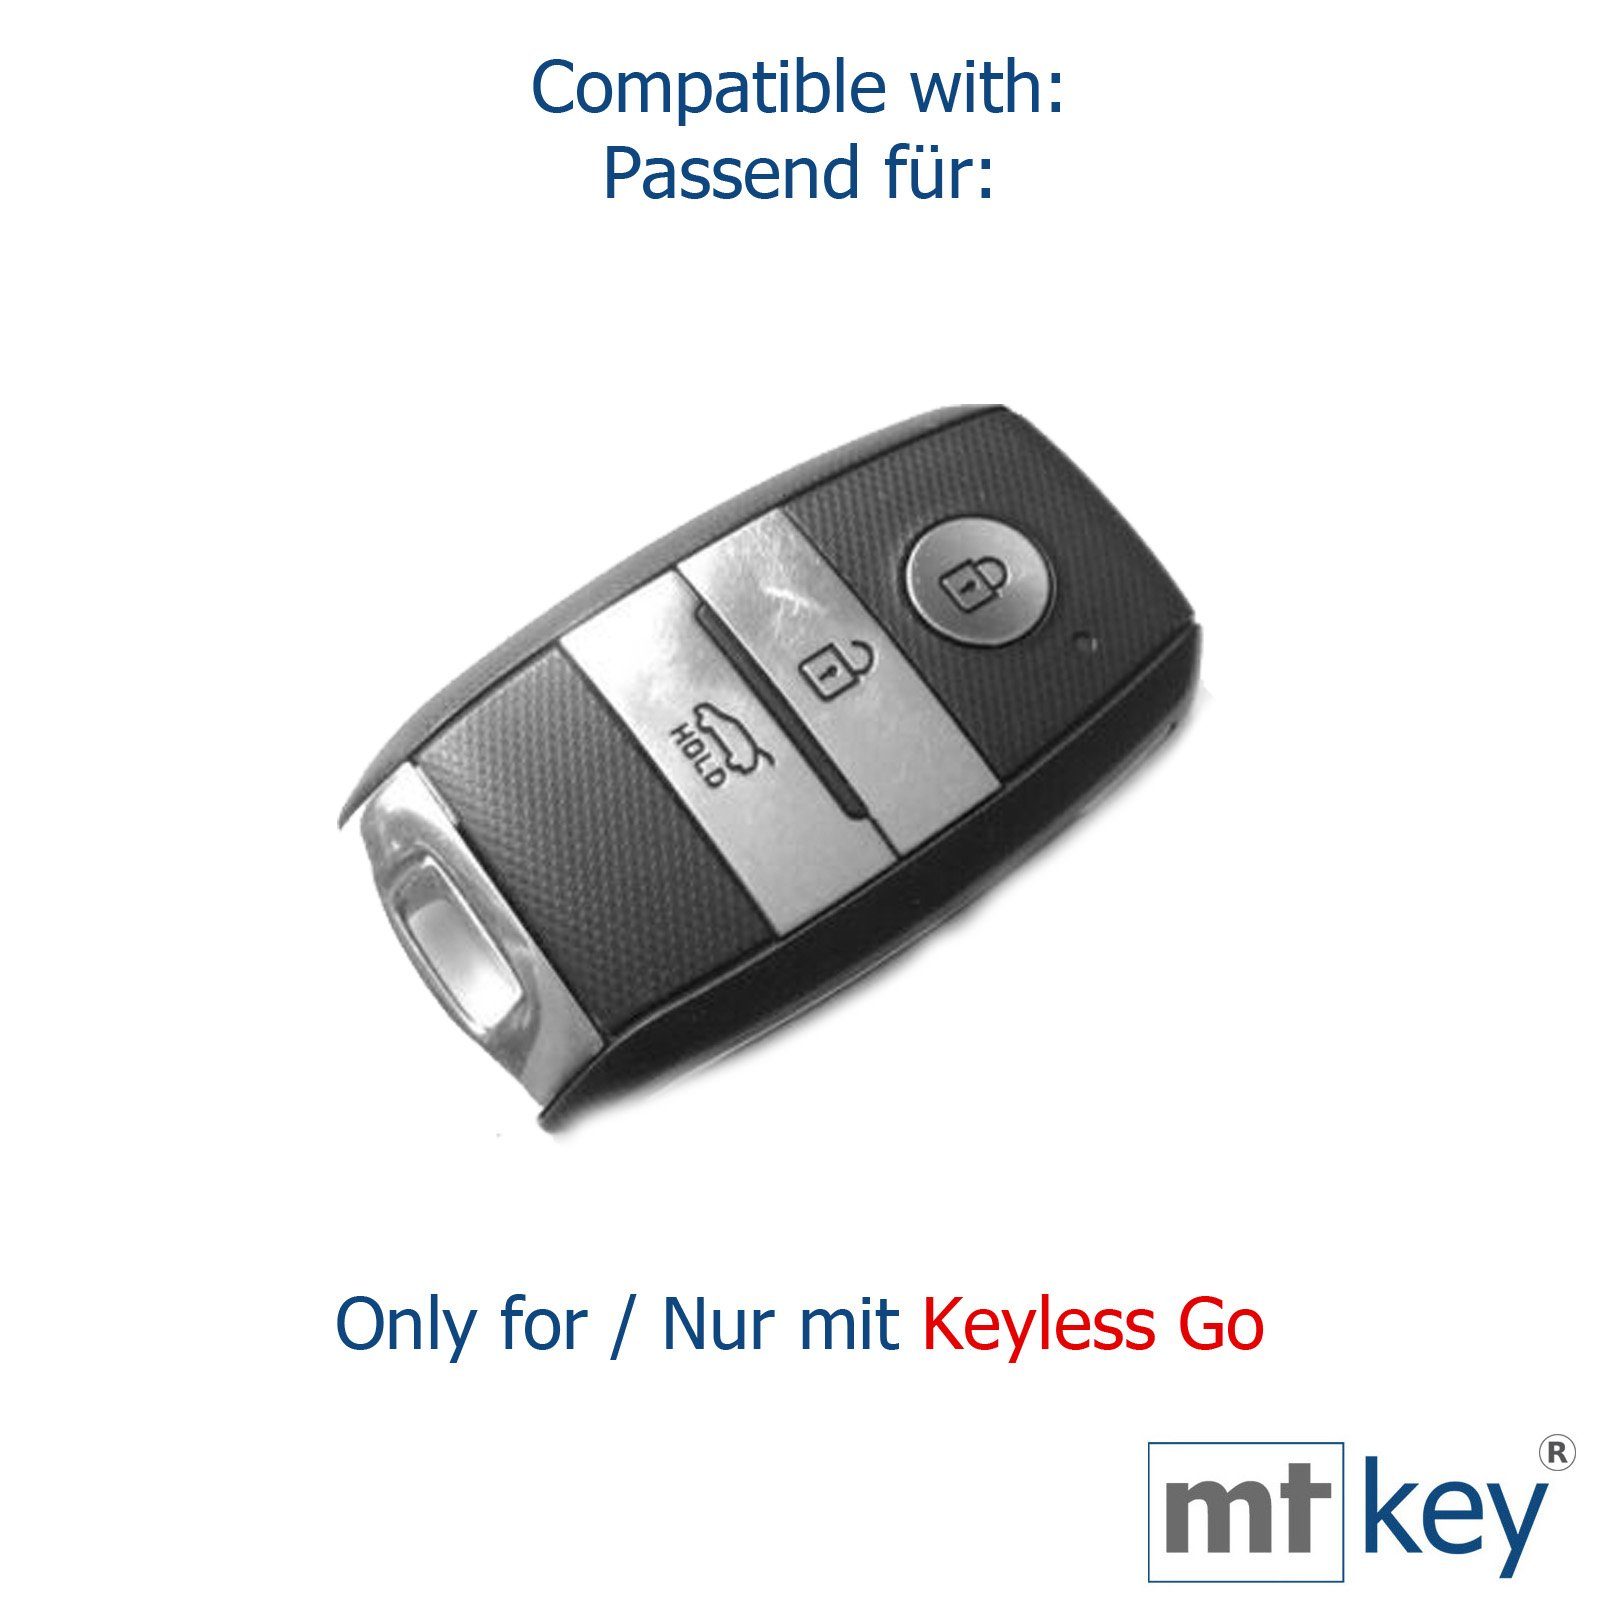 Picantio Schutzhülle KIA Autoschlüssel 3 mt-key für KEYLESS Softcase Stonic Sportage Silikon Tasten Schlüsseltasche Ceed Rio Pink, Soul